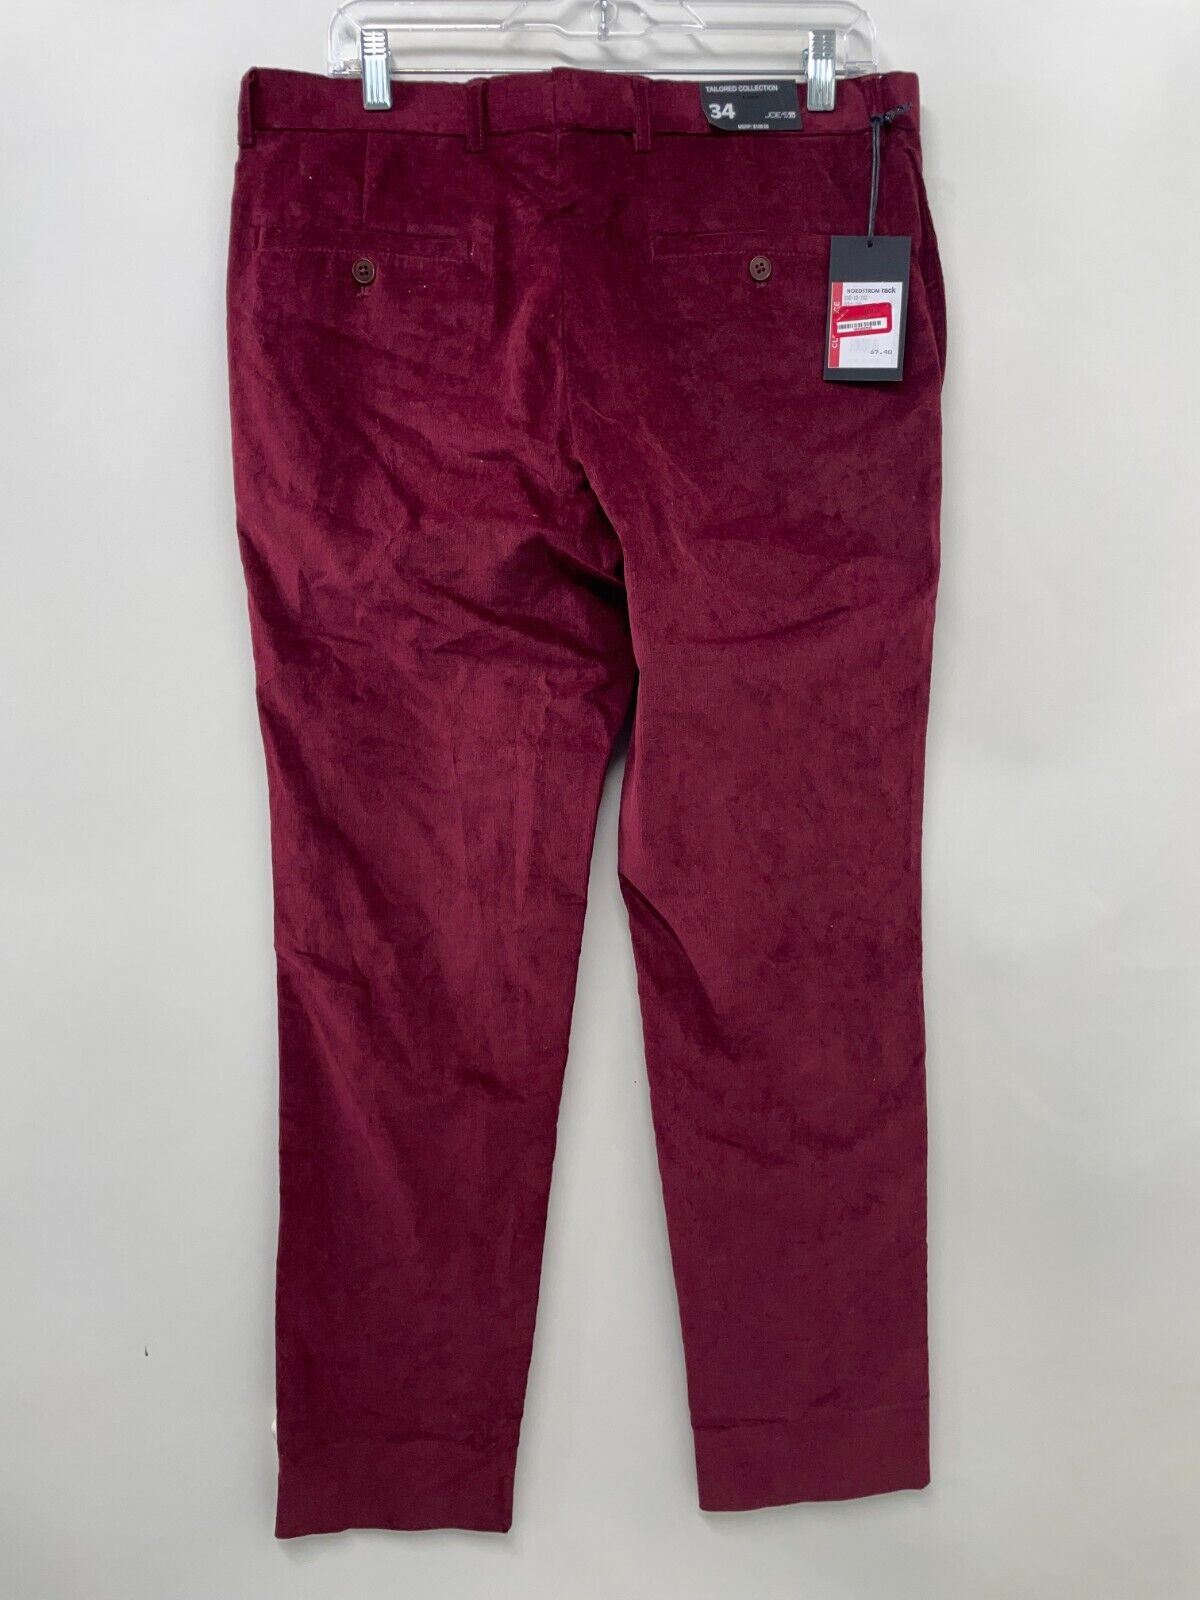 Joe’s Jeans Men's 34 Tailored Collection Corduroy Pants Burgundy J260 Slim NWT